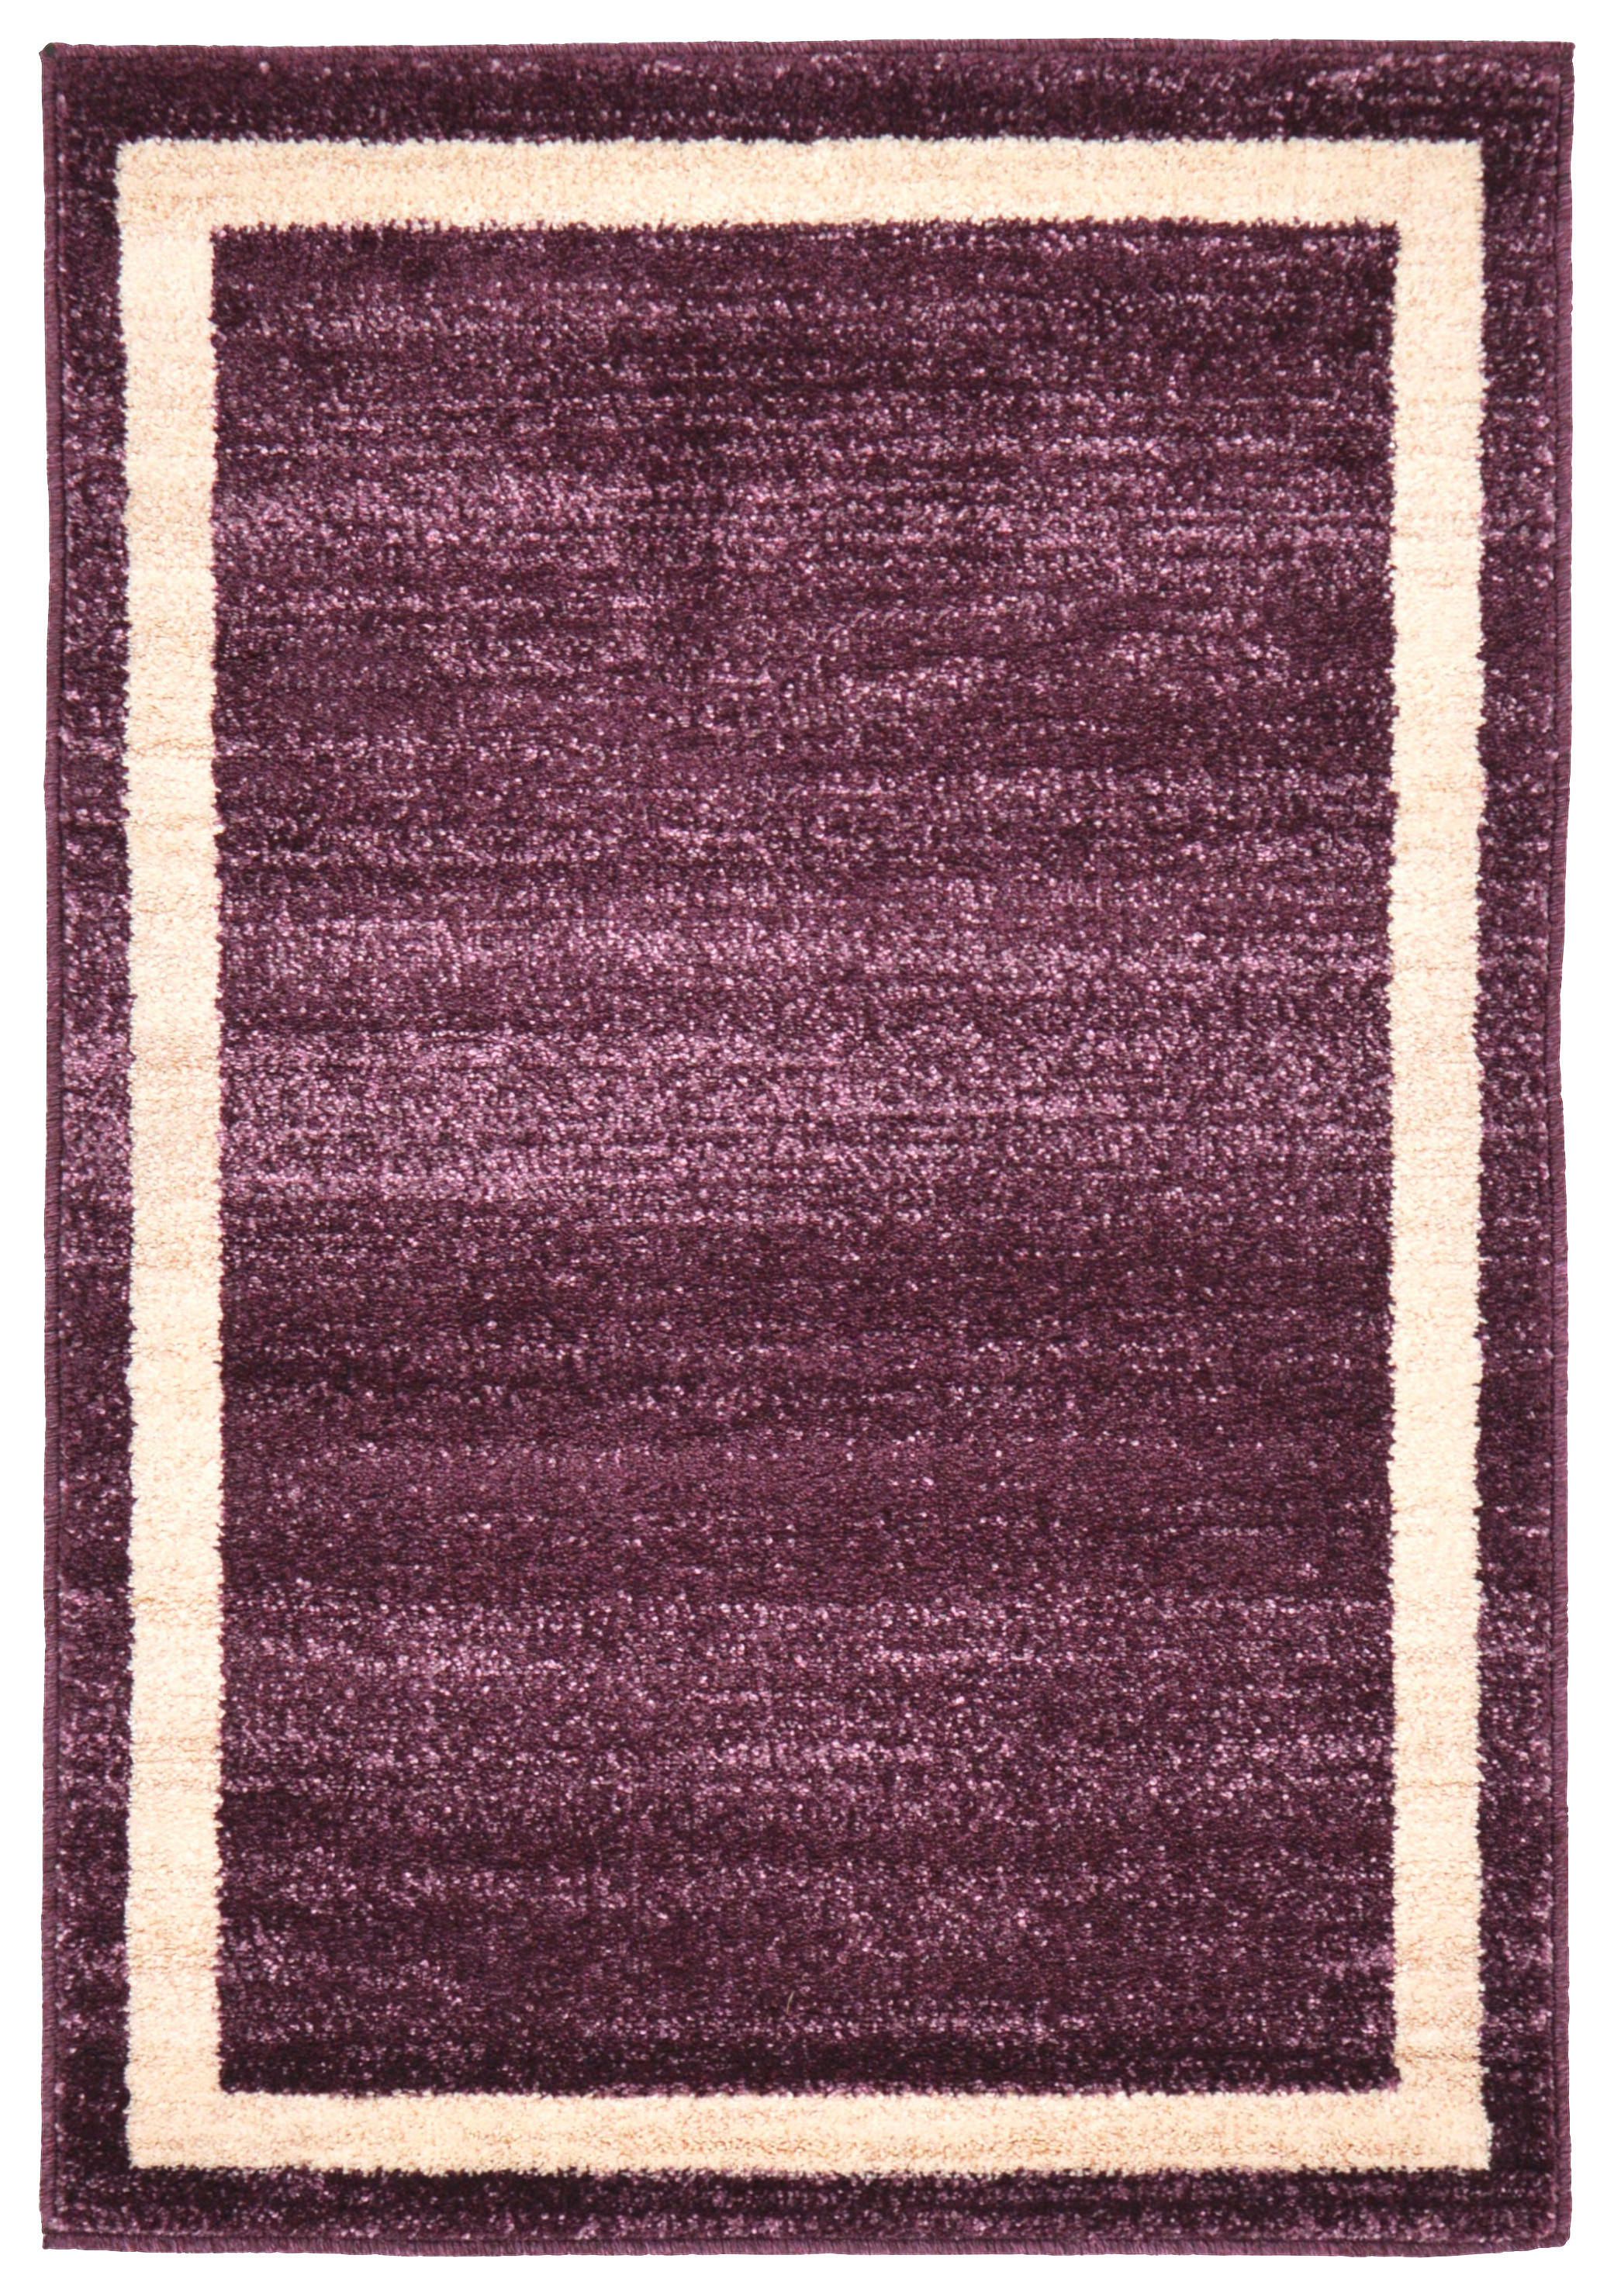 WEBTEPPICH  90/65 cm  Creme, Violett   - Violett/Creme, Basics, Textil (90/65cm)